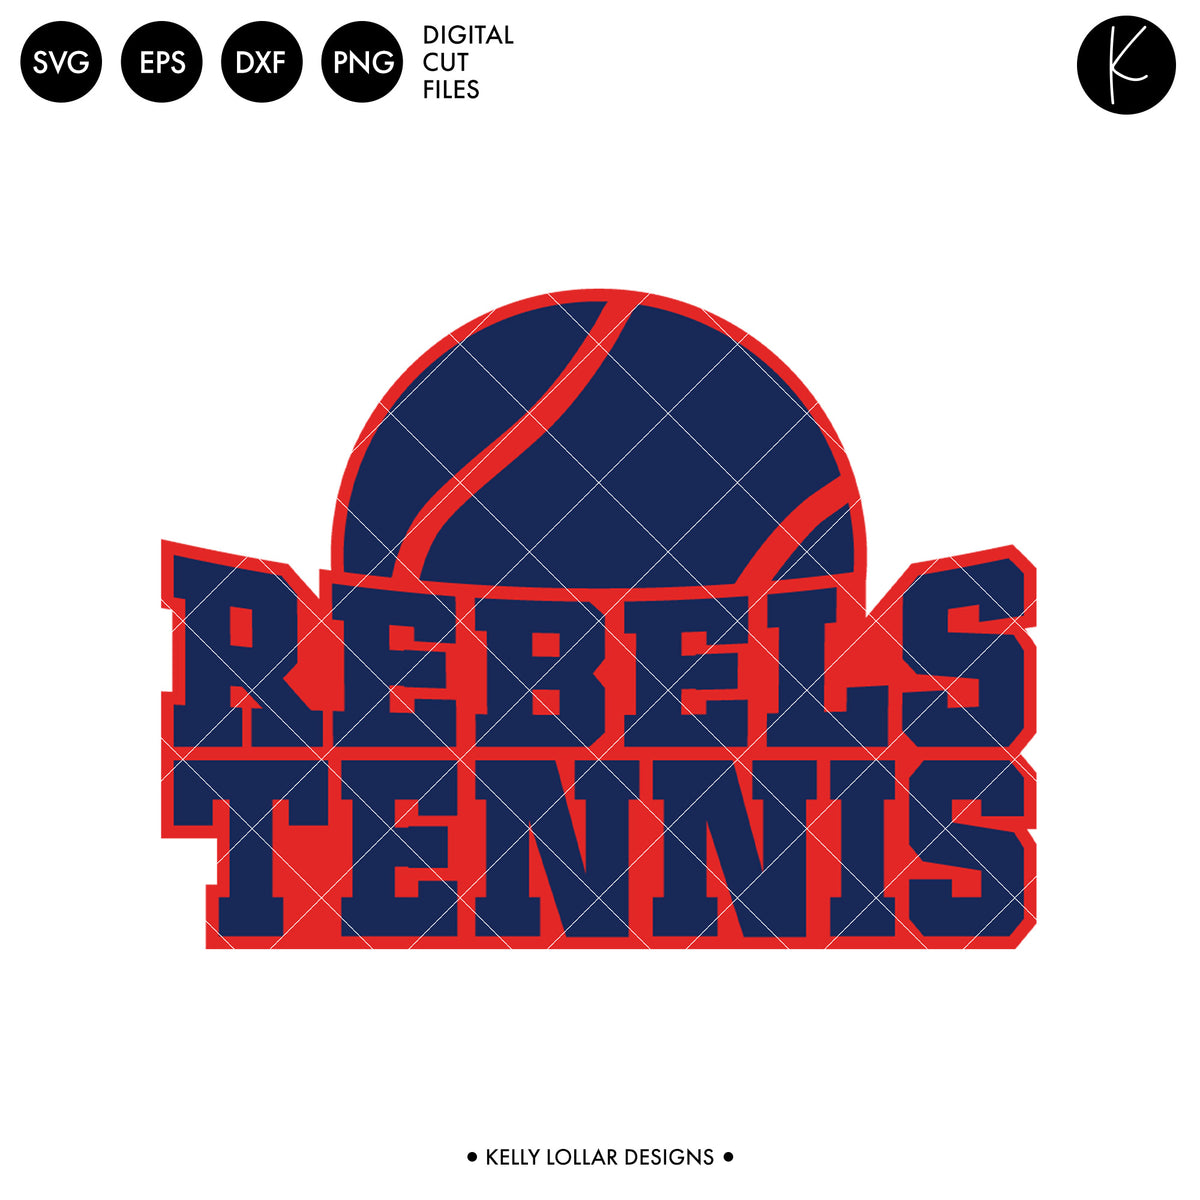 Rebels Tennis Bundle | SVG DXF EPS PNG Cut Files